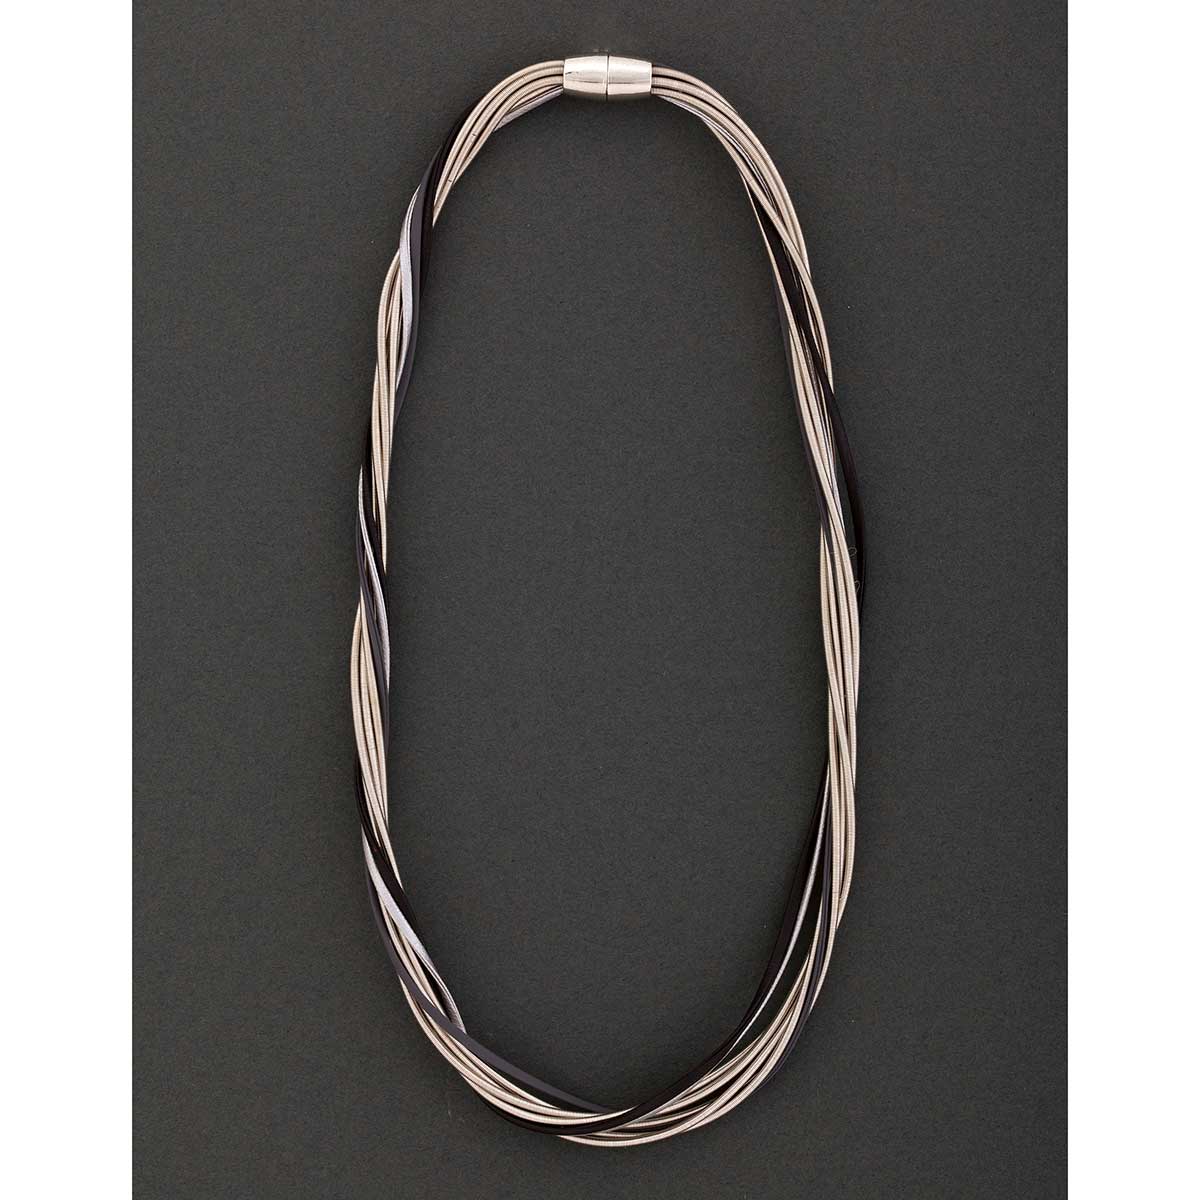 Grey/Black Swirl Multi Strand Coil/Leatherette Necklace 18"